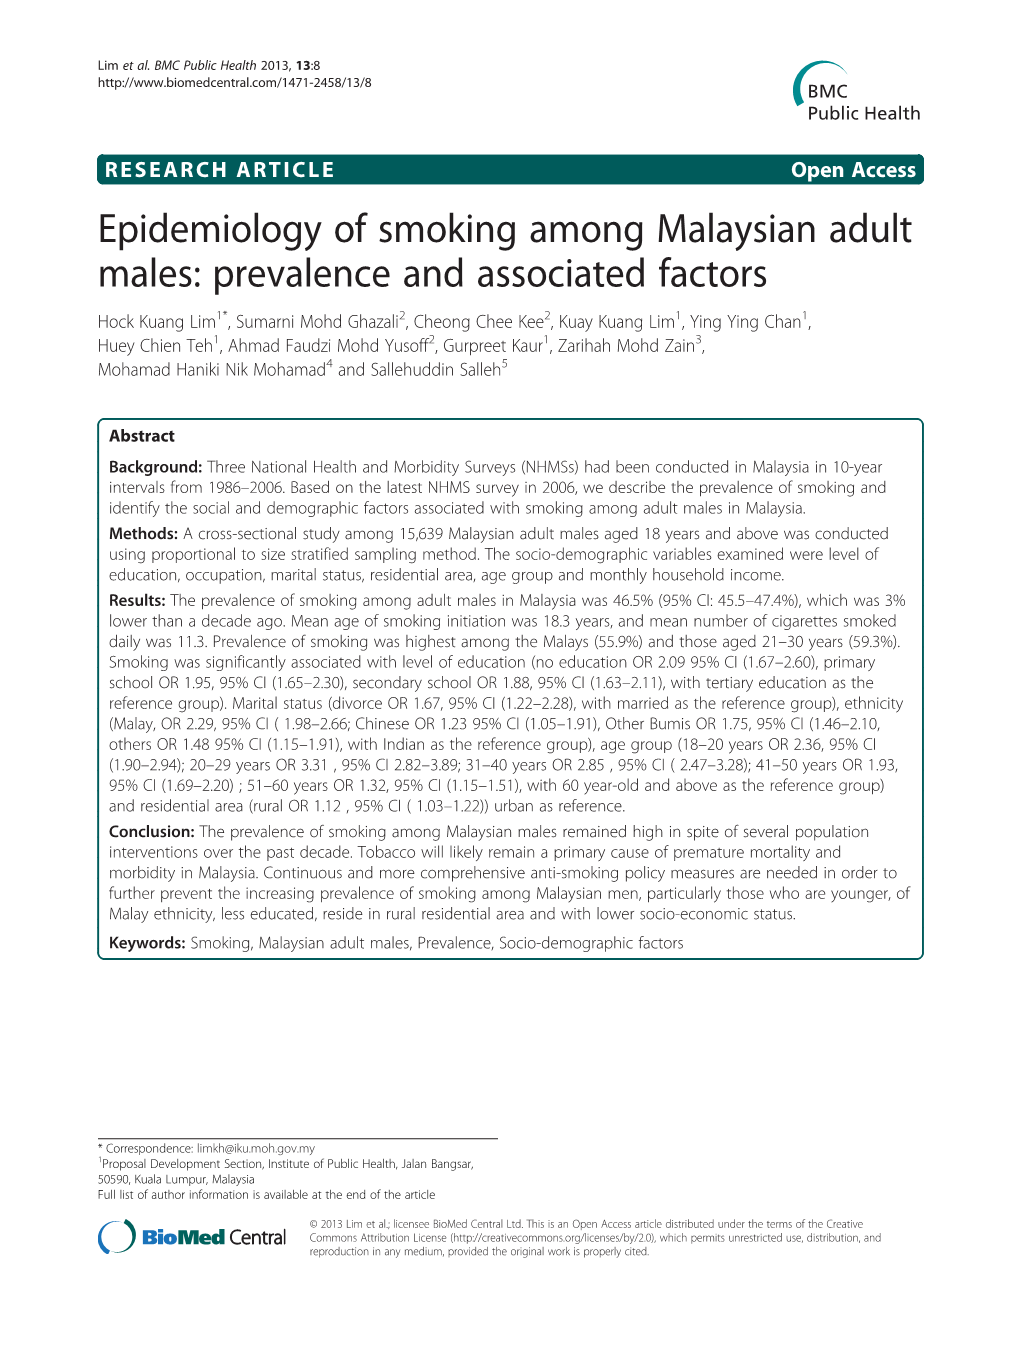 Epidemiology of Smoking Among Malaysian Adult Males: Prevalence